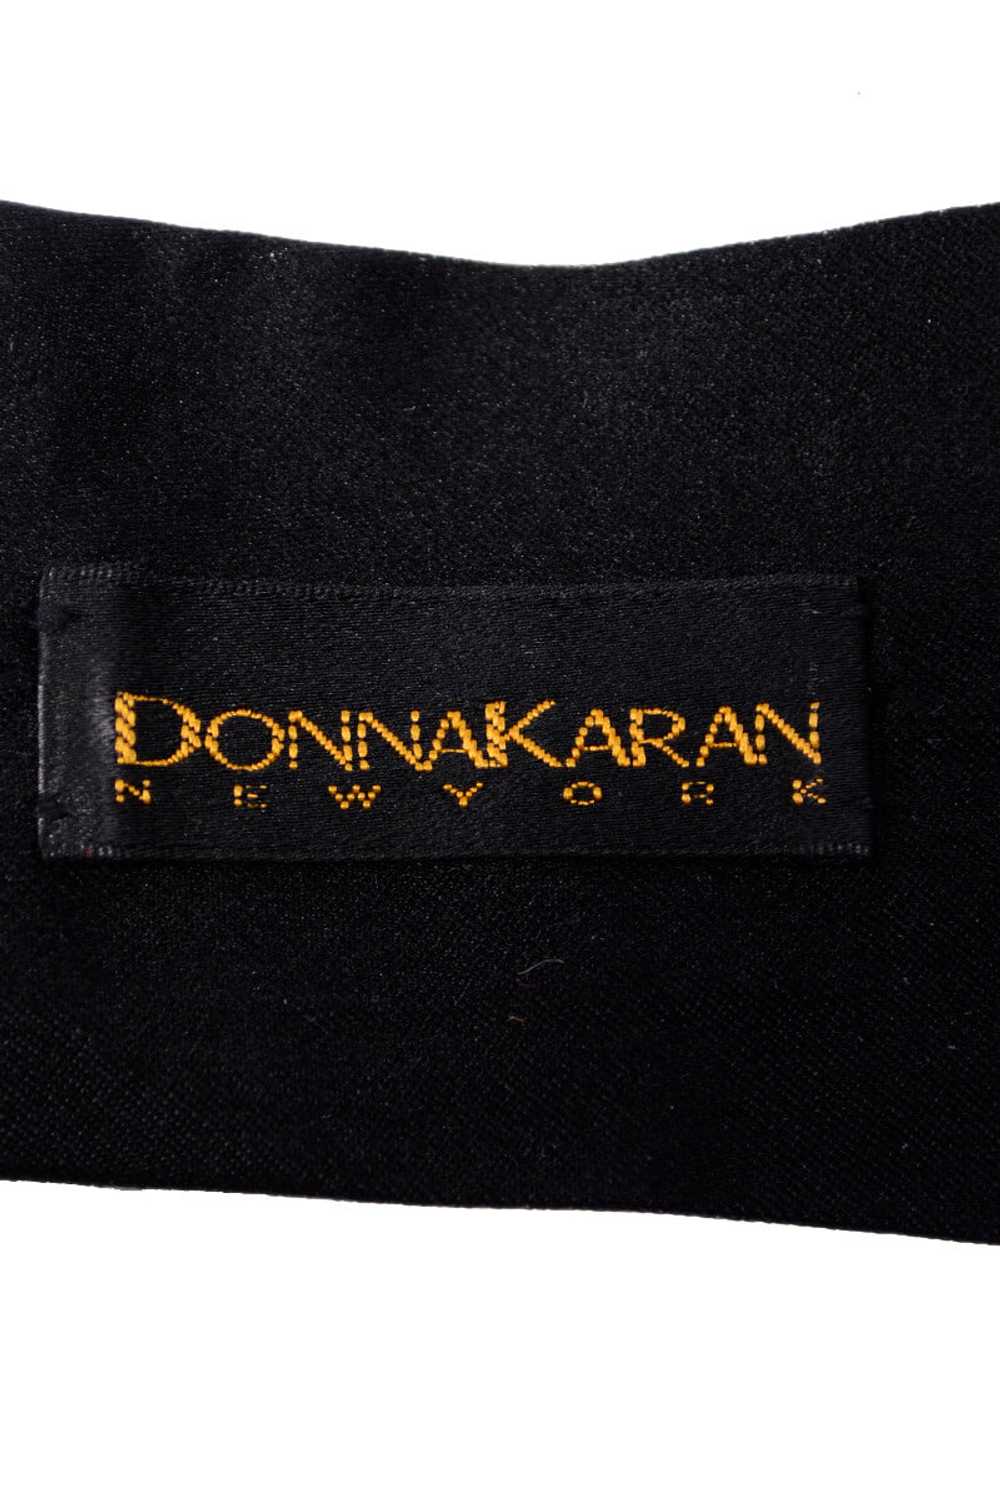 1990s Donna Karan Black Silk Satin Rose Belt - image 6